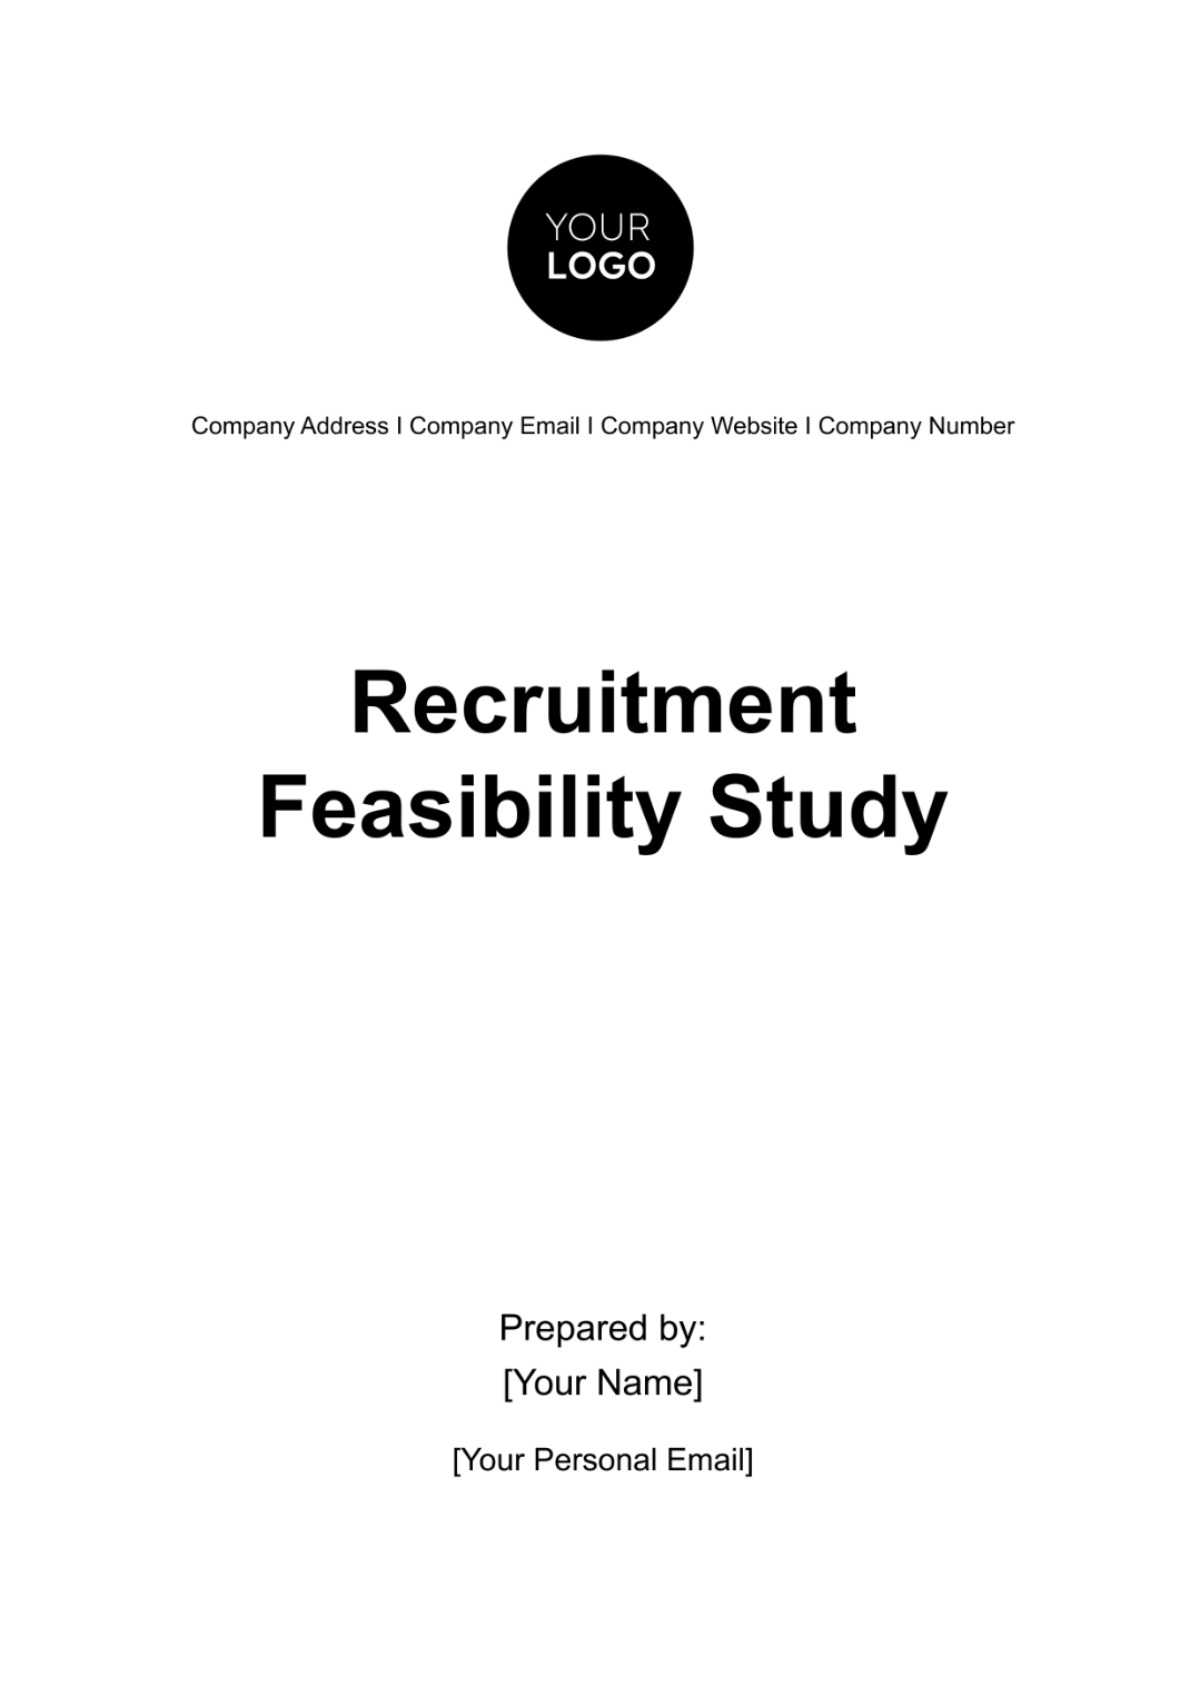 Recruitment Feasibility Study HR Template